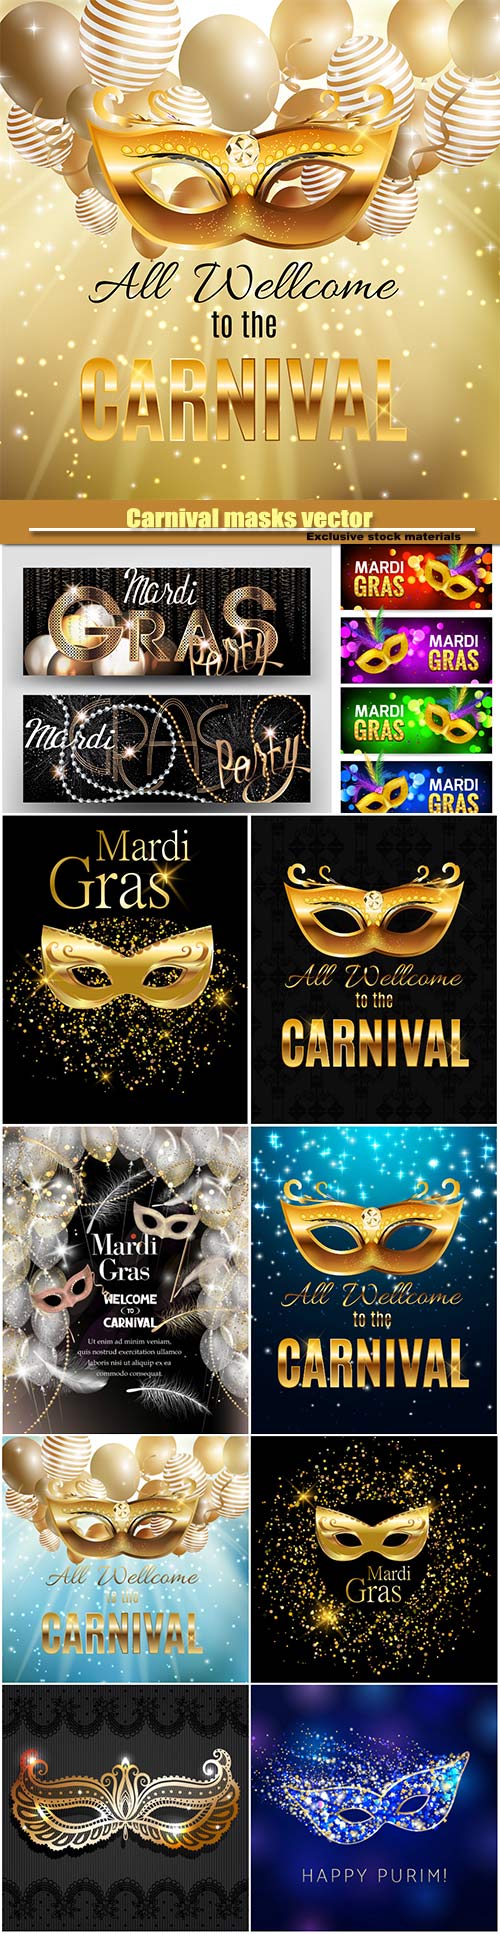 Carnival masks vector